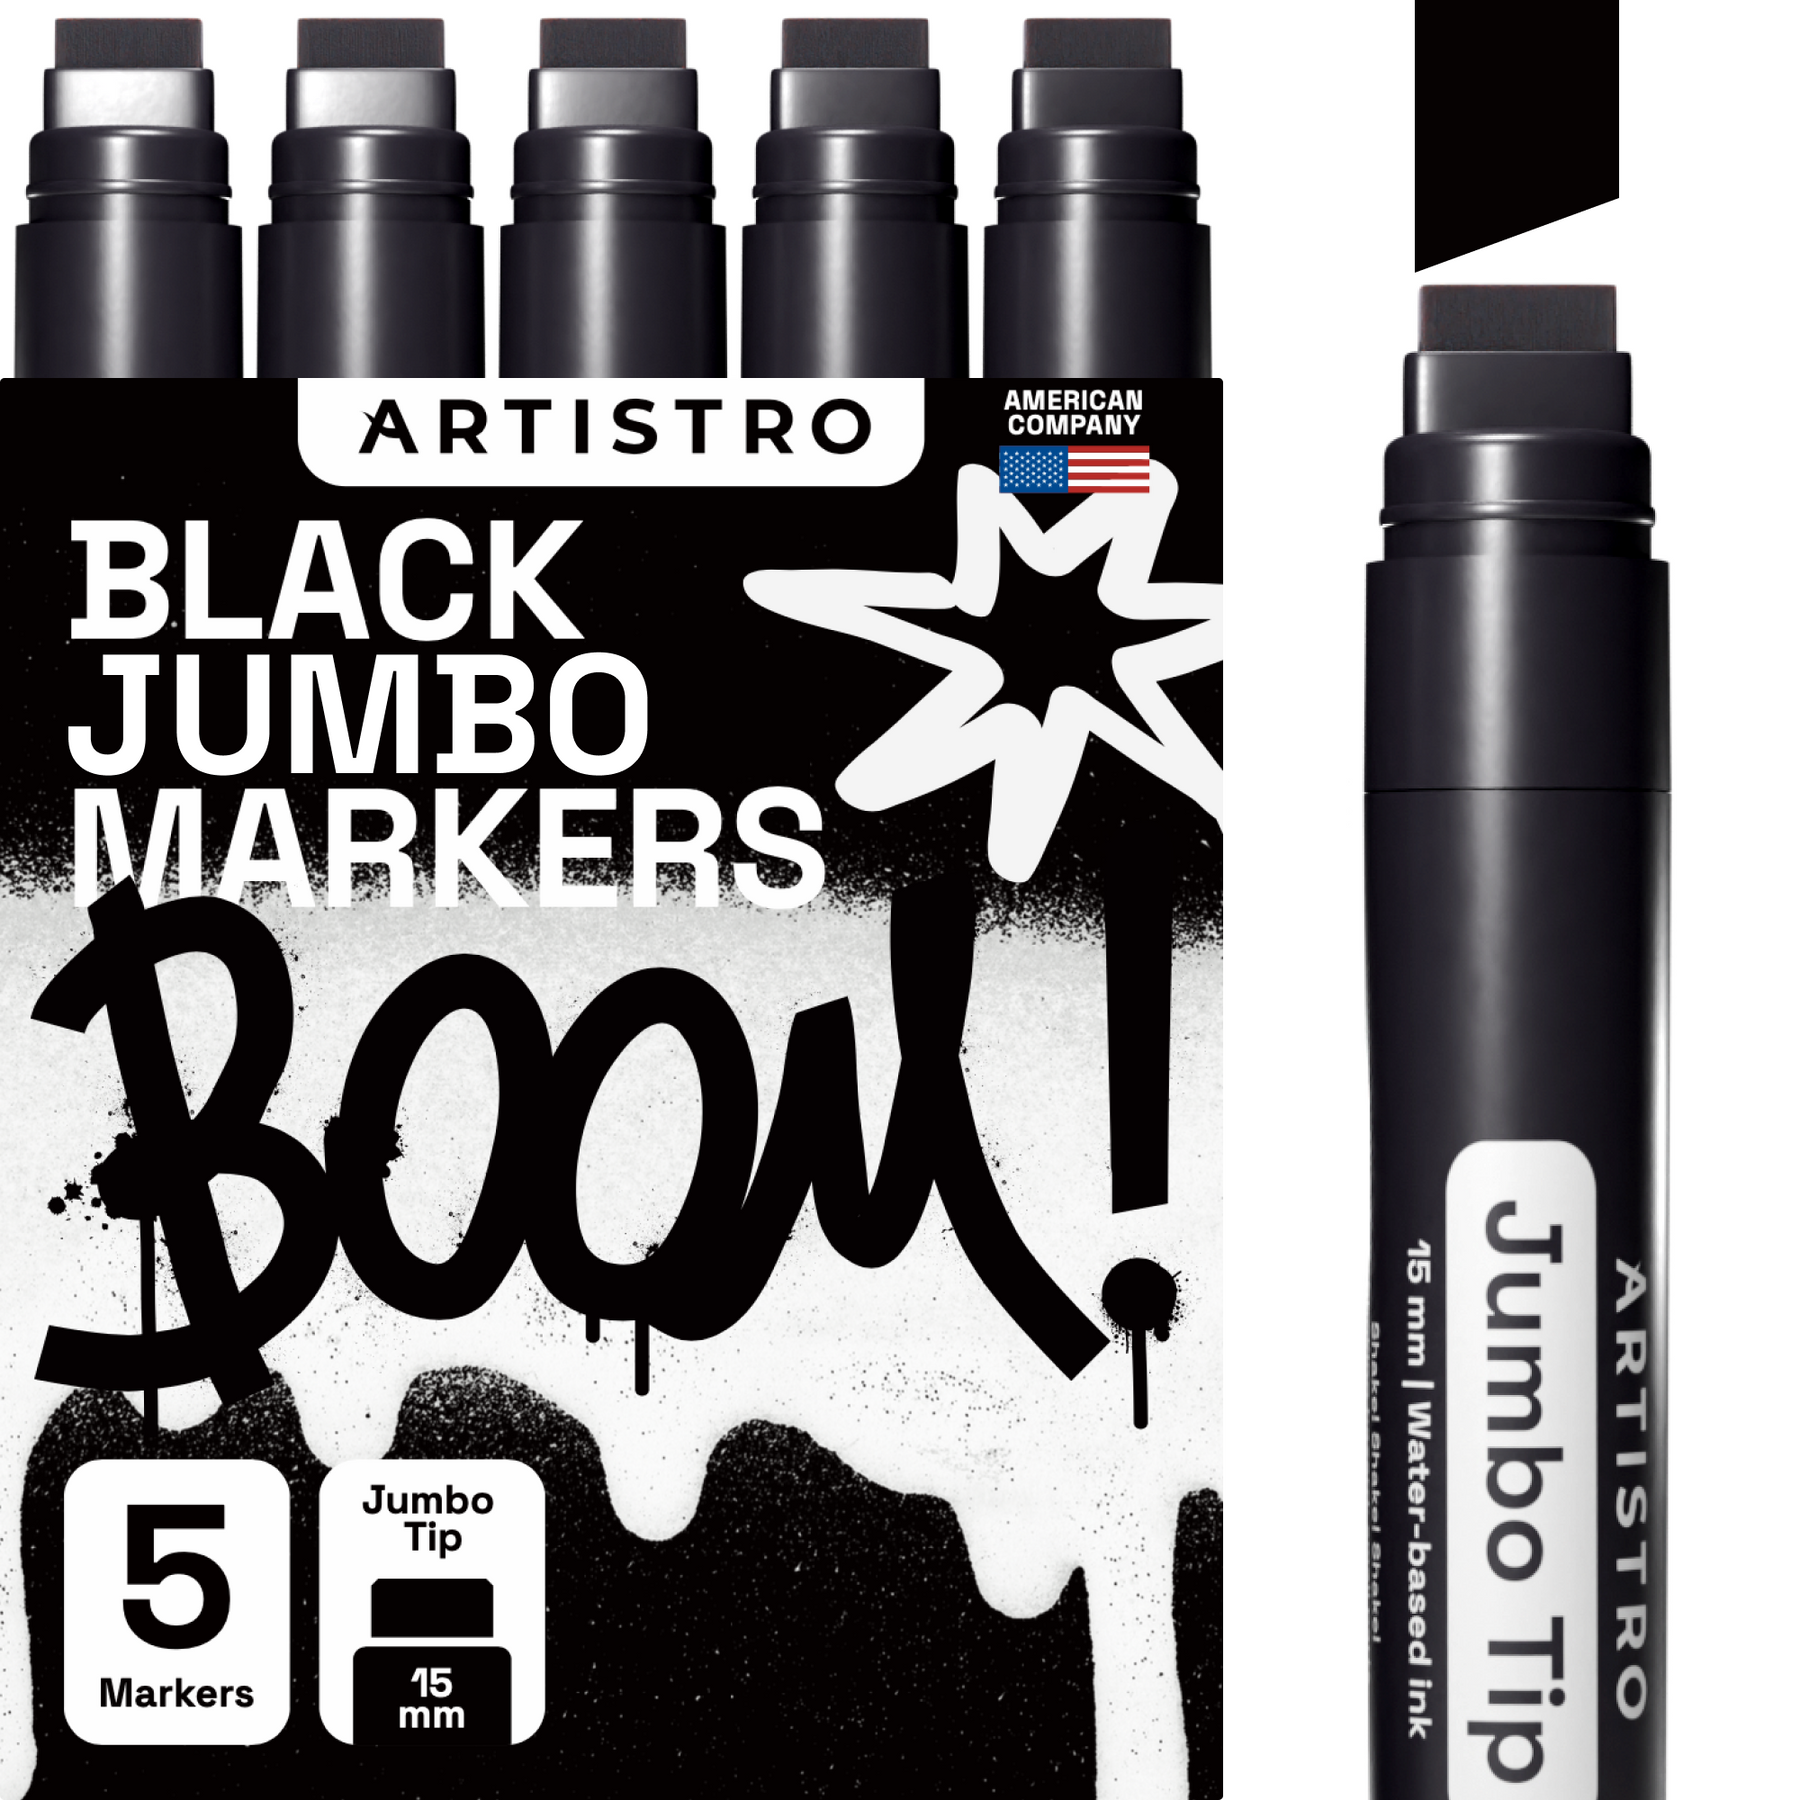 product 5 black jumbo tip markers